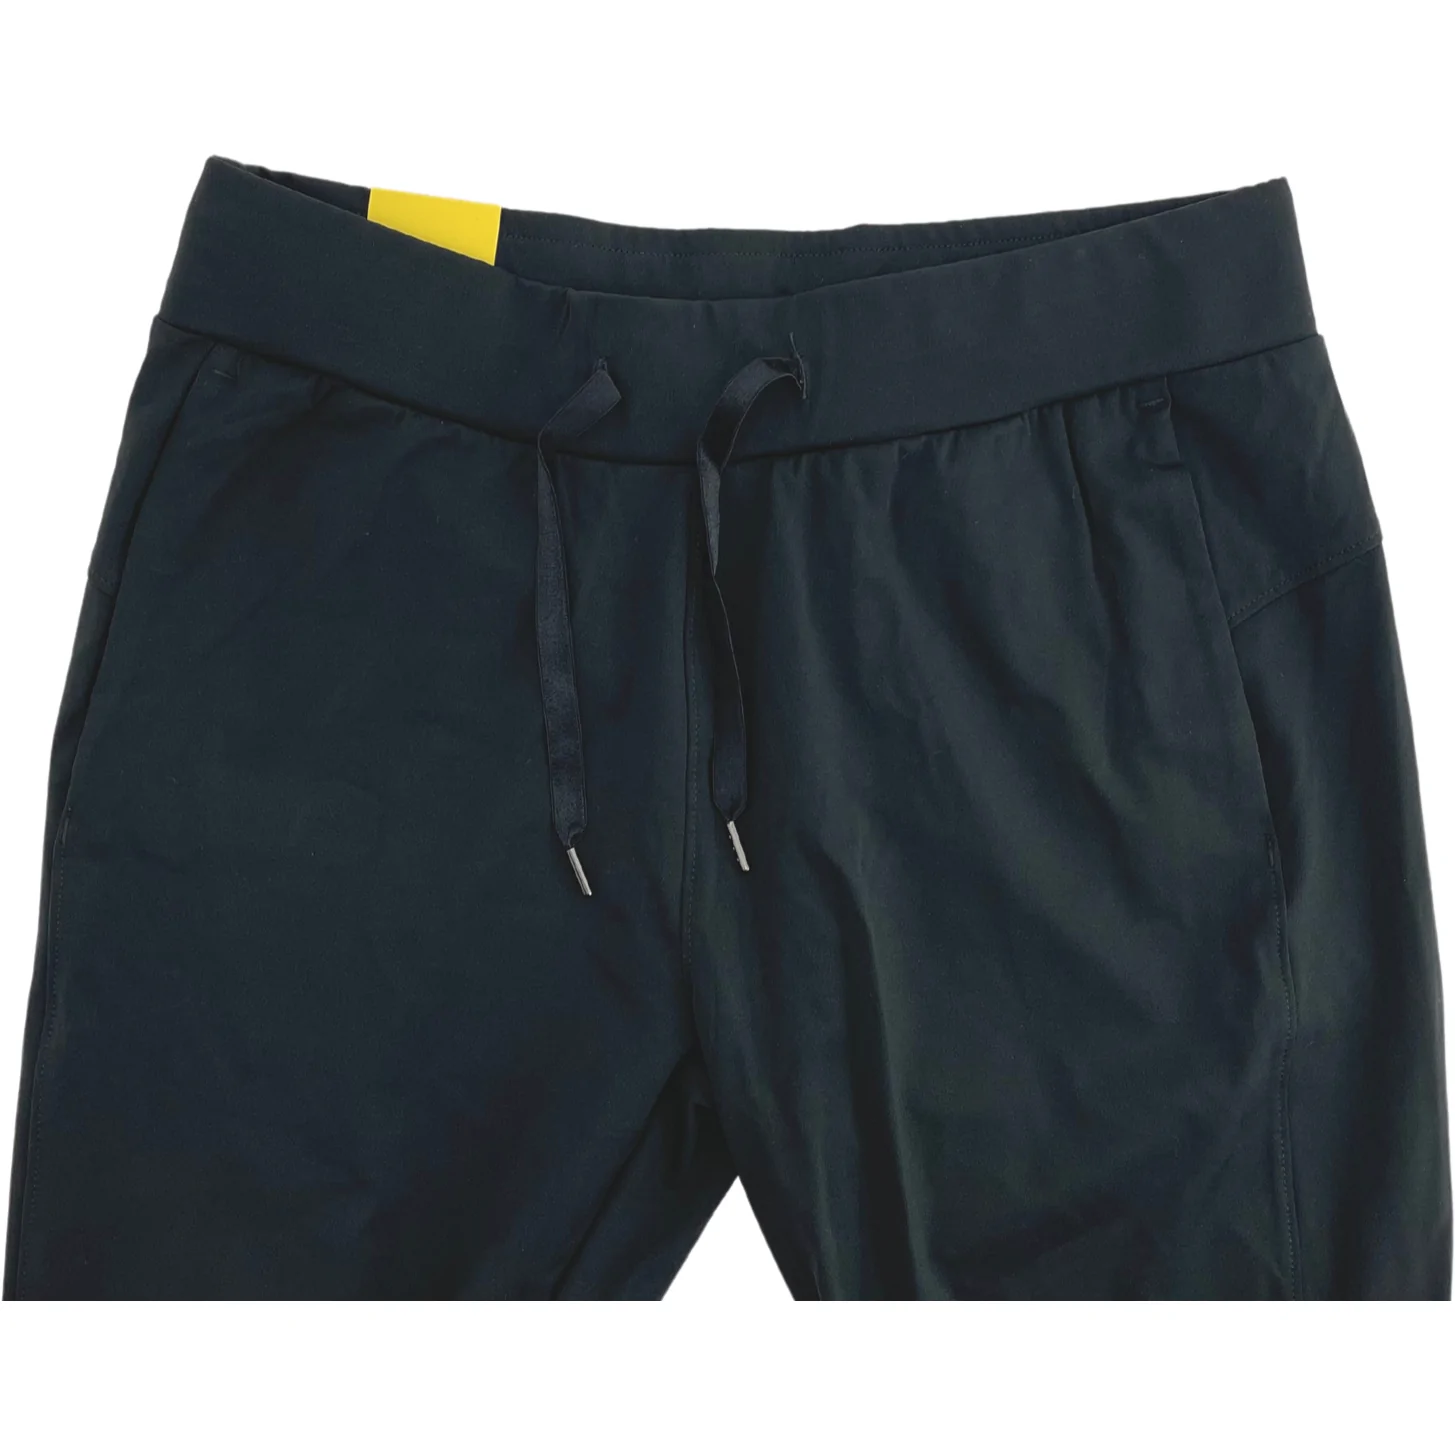 Tuff Athletics Women's Travel Pants / Black / Various Sizes